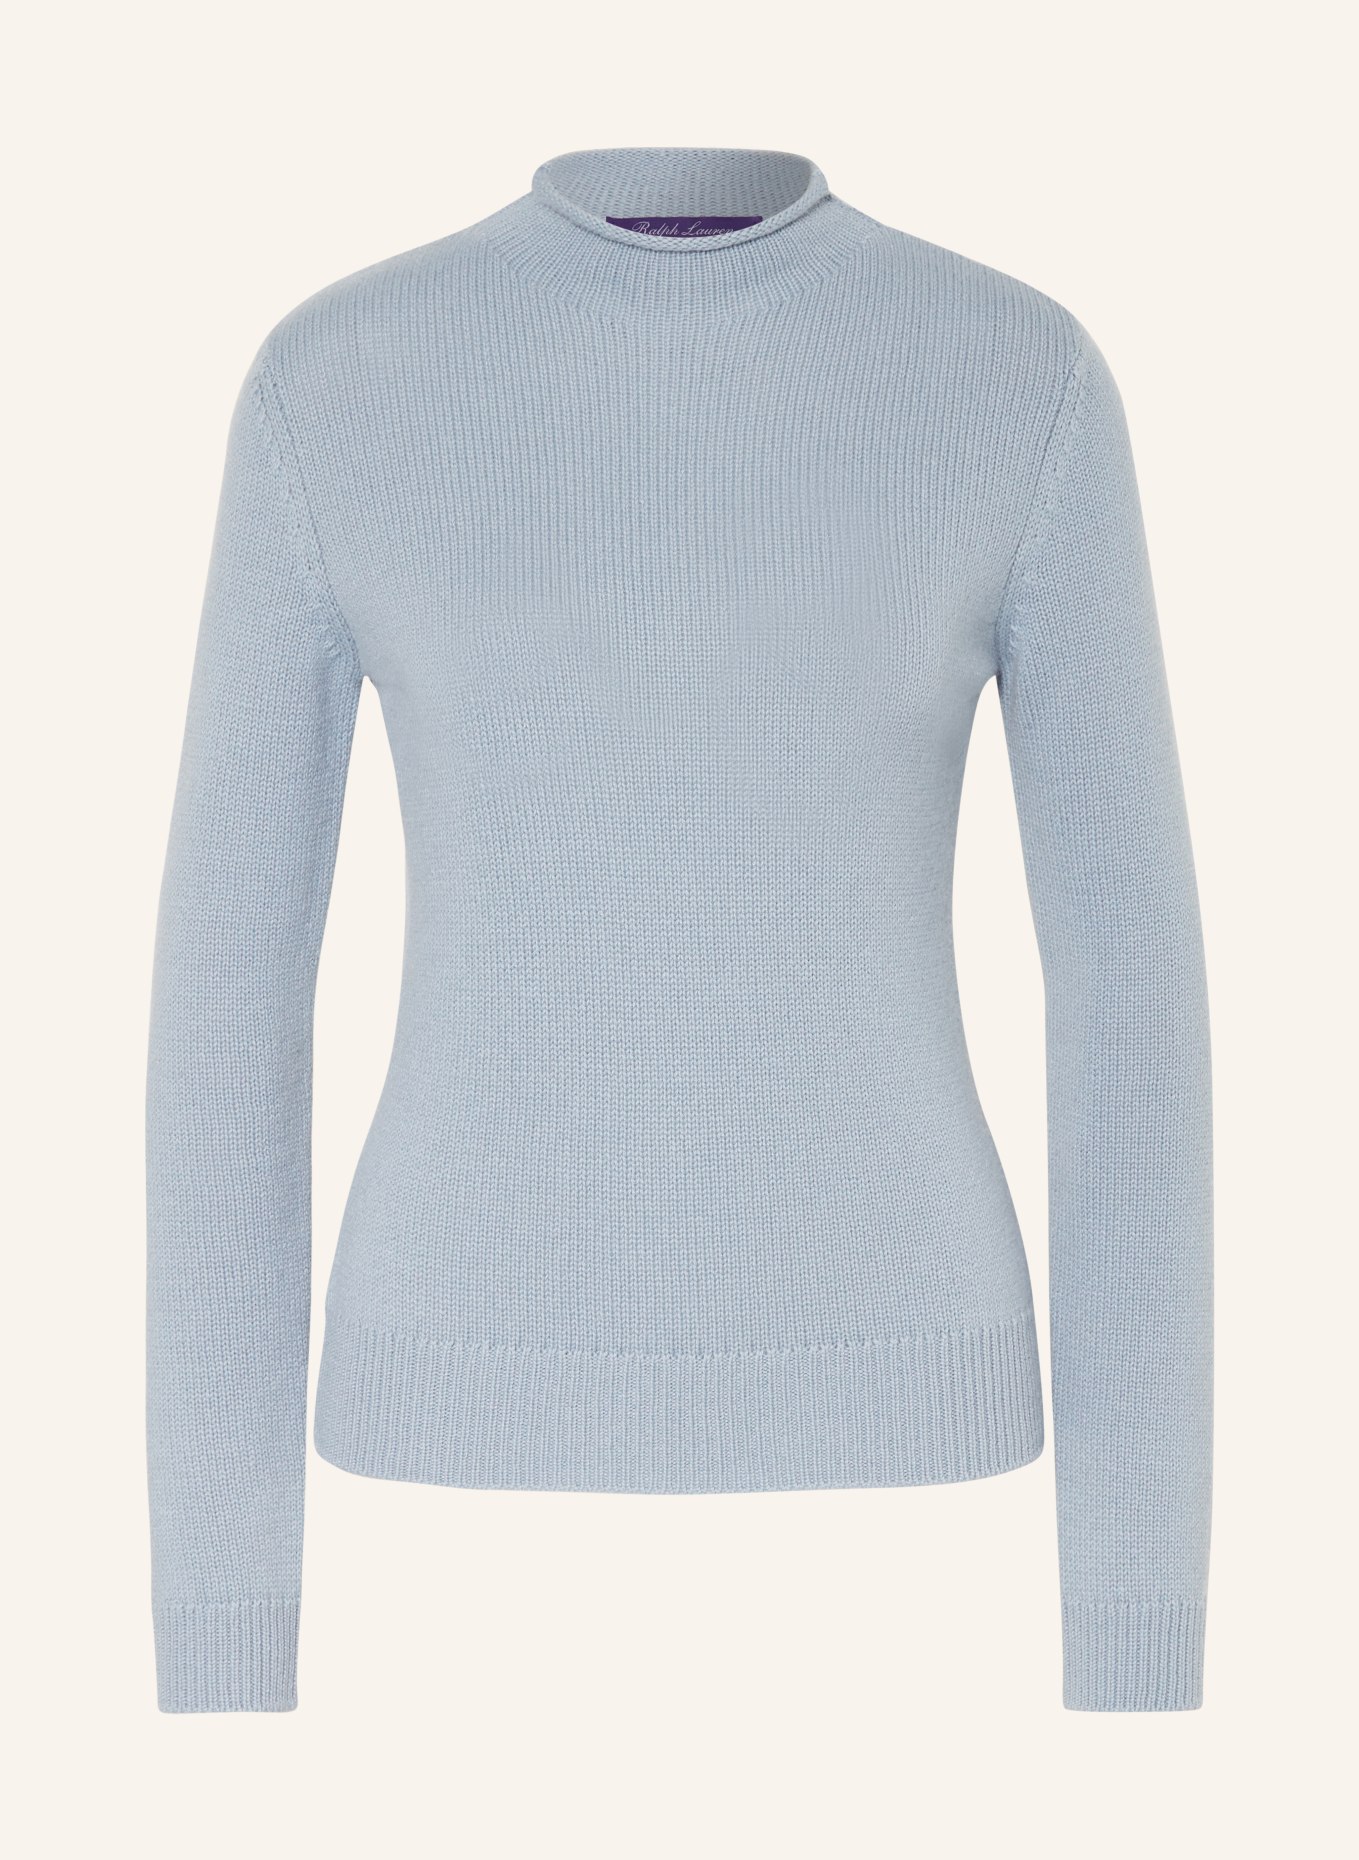 RALPH LAUREN Collection Cashmere-Pullover, Farbe: BLAUGRAU (Bild 1)